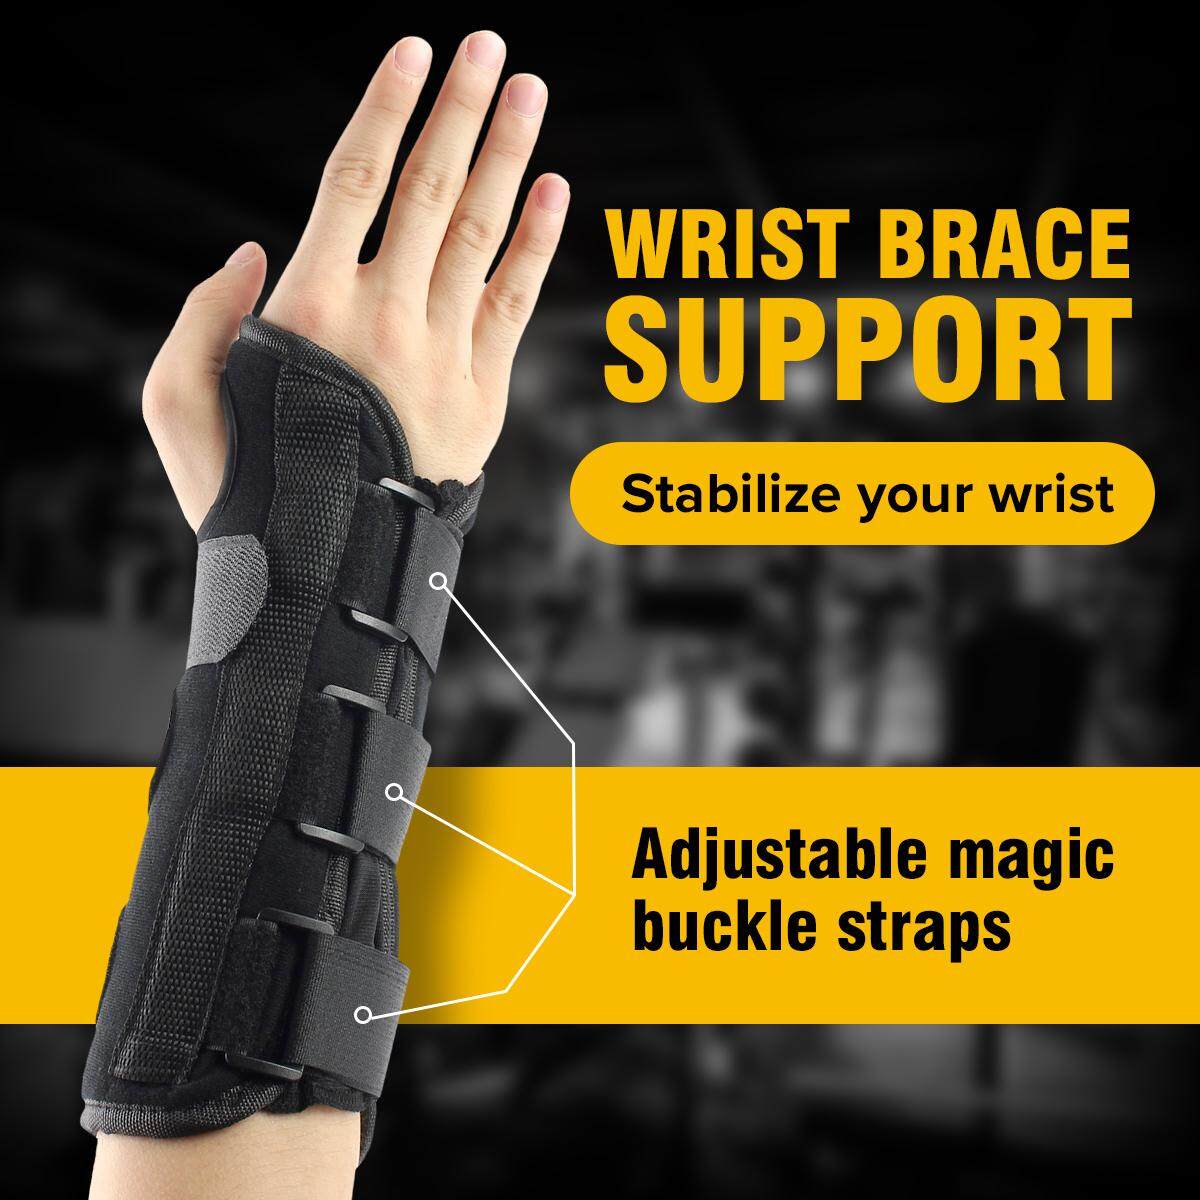 Color : Left, Size : Small U/S 1Pc Professional Wrist Support Splint Arthritis Band Belt Carpal Tunnel Wrist Brace Sprain Prevention Wrist Protector for Fitnes